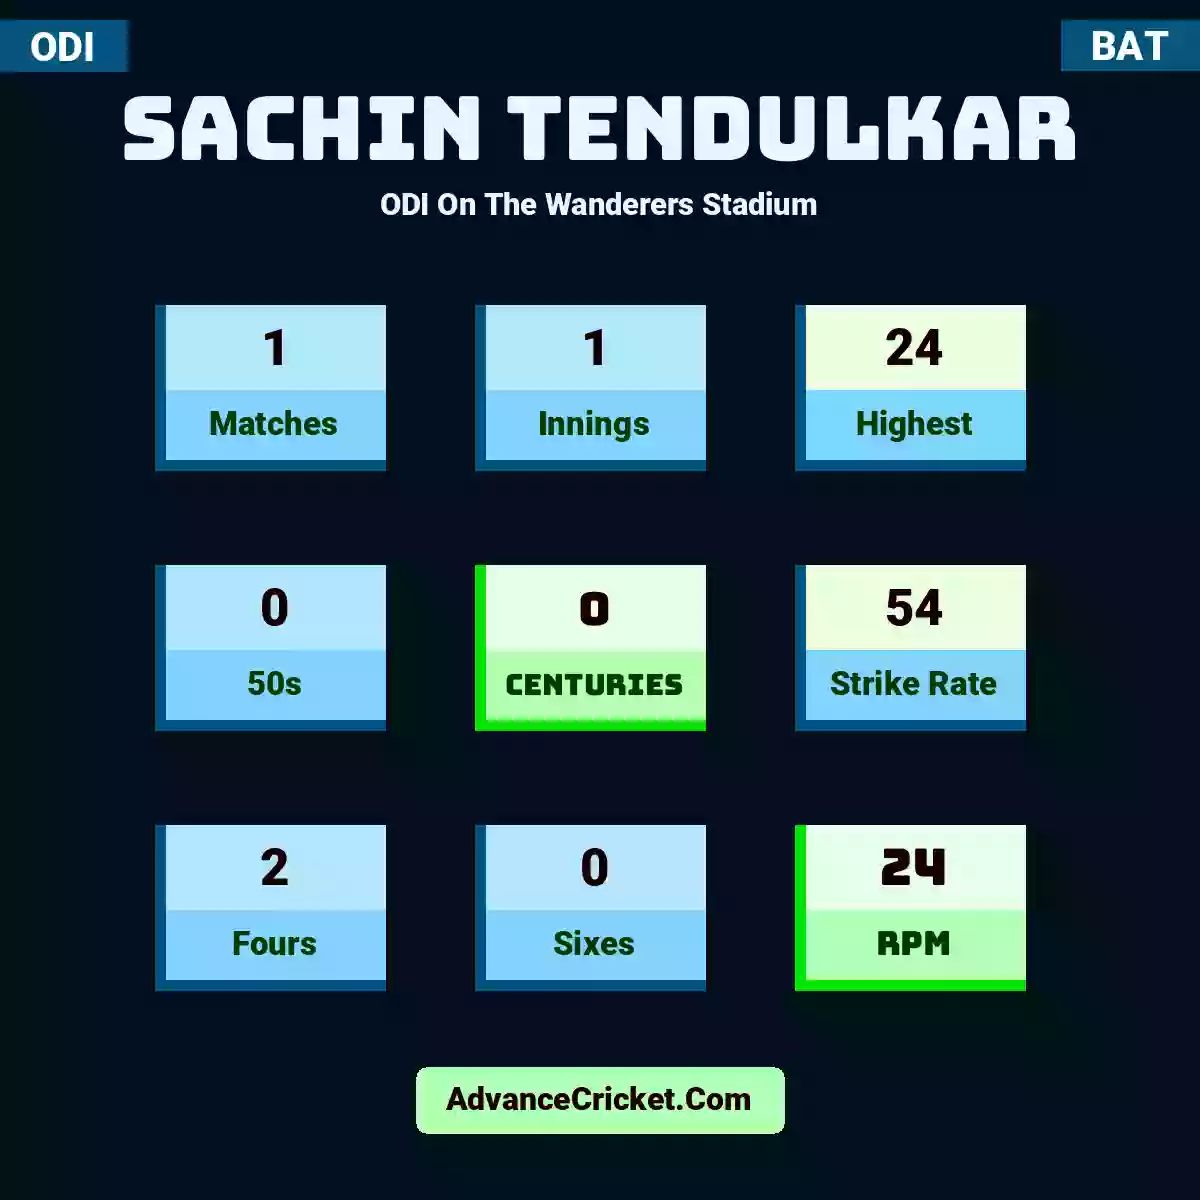 Sachin Tendulkar ODI  On The Wanderers Stadium, Sachin Tendulkar played 1 matches, scored 24 runs as highest, 0 half-centuries, and 0 centuries, with a strike rate of 54. S.Tendulkar hit 2 fours and 0 sixes, with an RPM of 24.